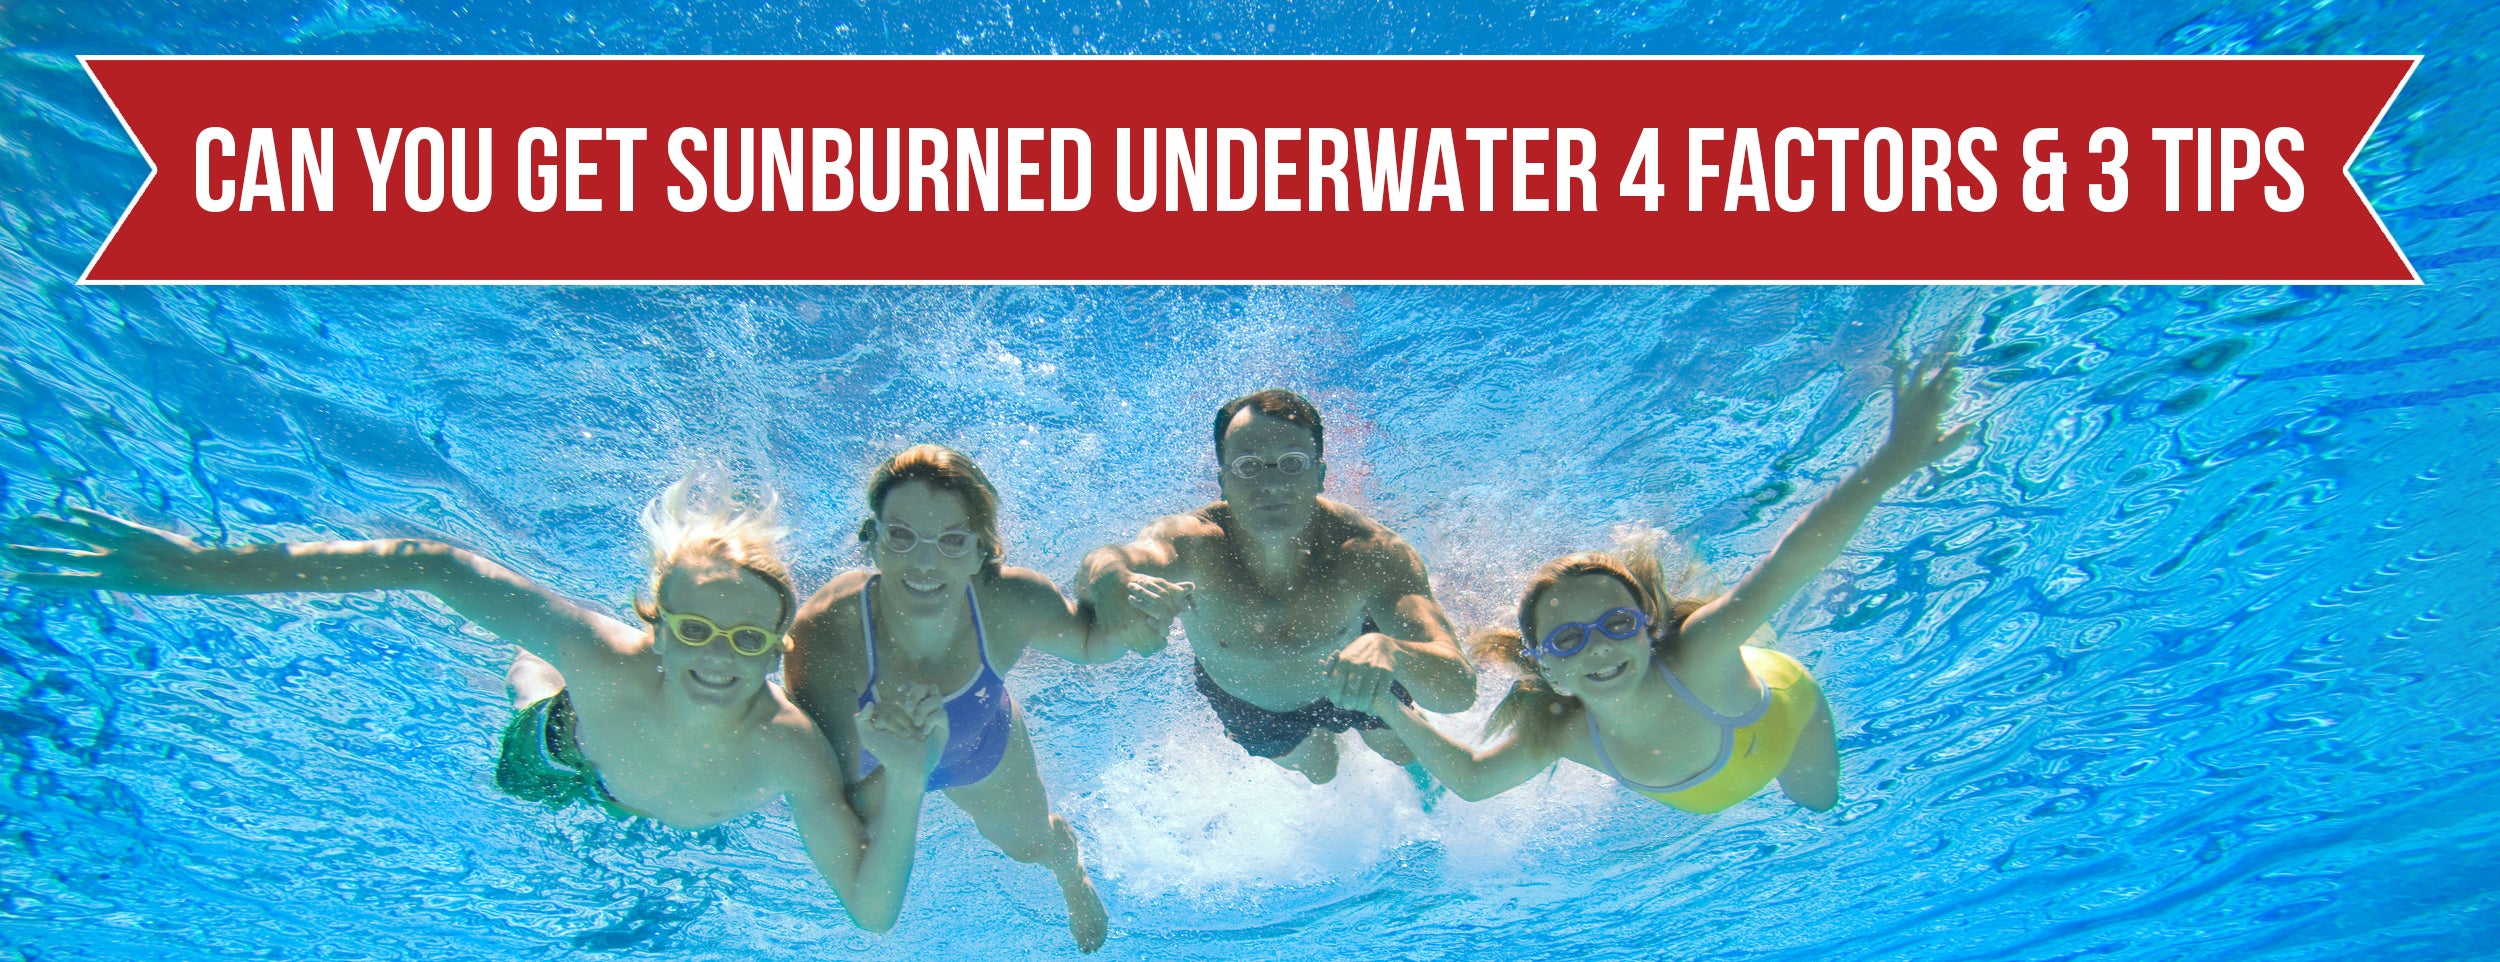 The 7 Factors & Tips to Avoid Getting Sunburned Underwater